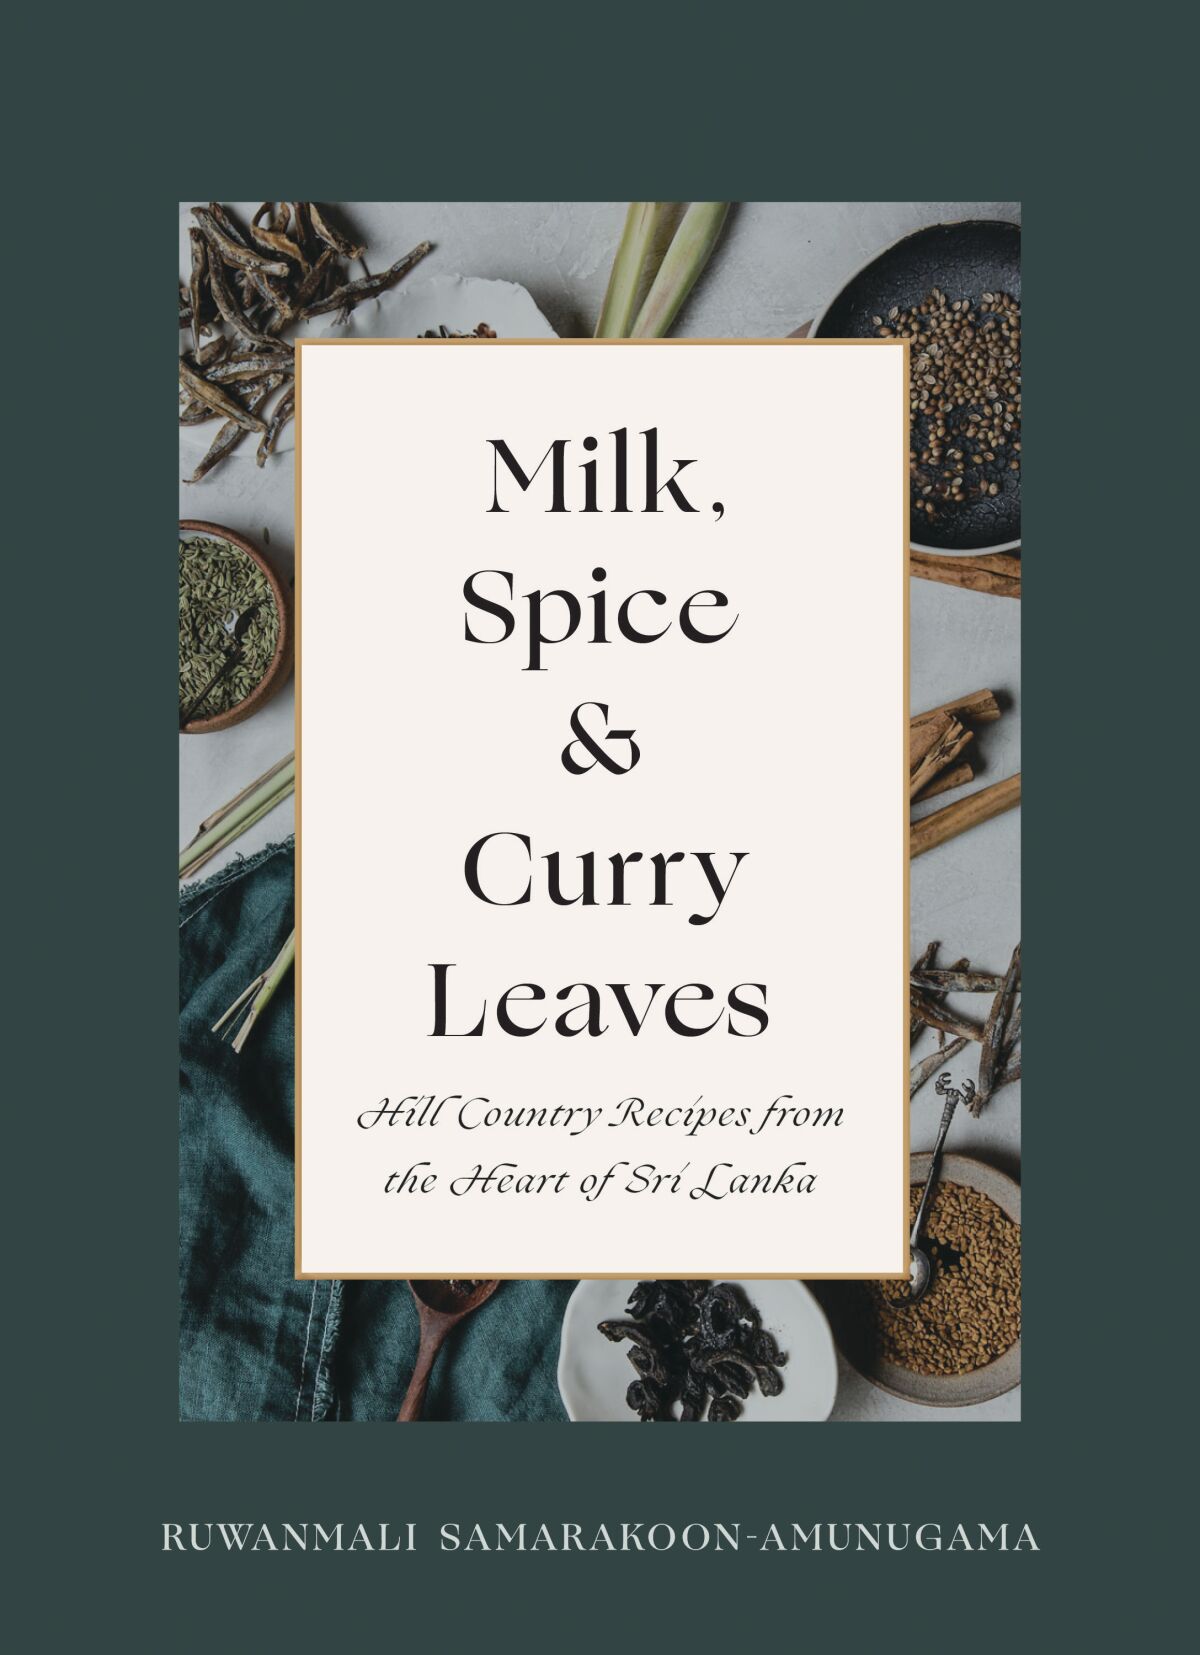 Milk, Spice and Curry Leaves: Hill Country Recipes from the Heart of Sri Lanka by Ruwanmali Samarakoon-Amunugama